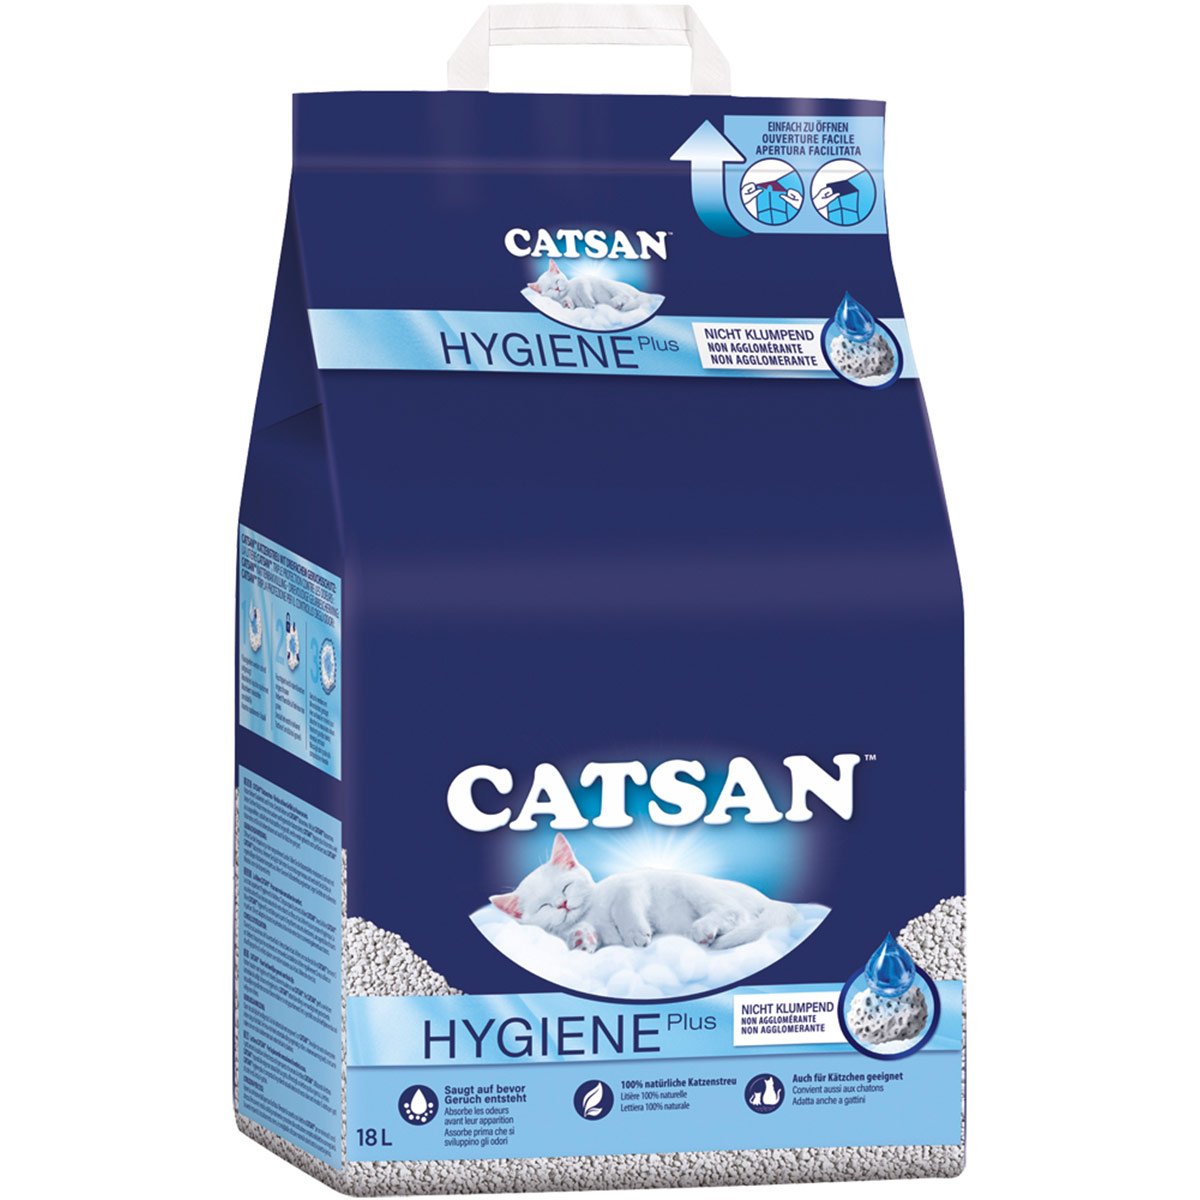 CATSAN Hygiene Plus 18l von Catsan